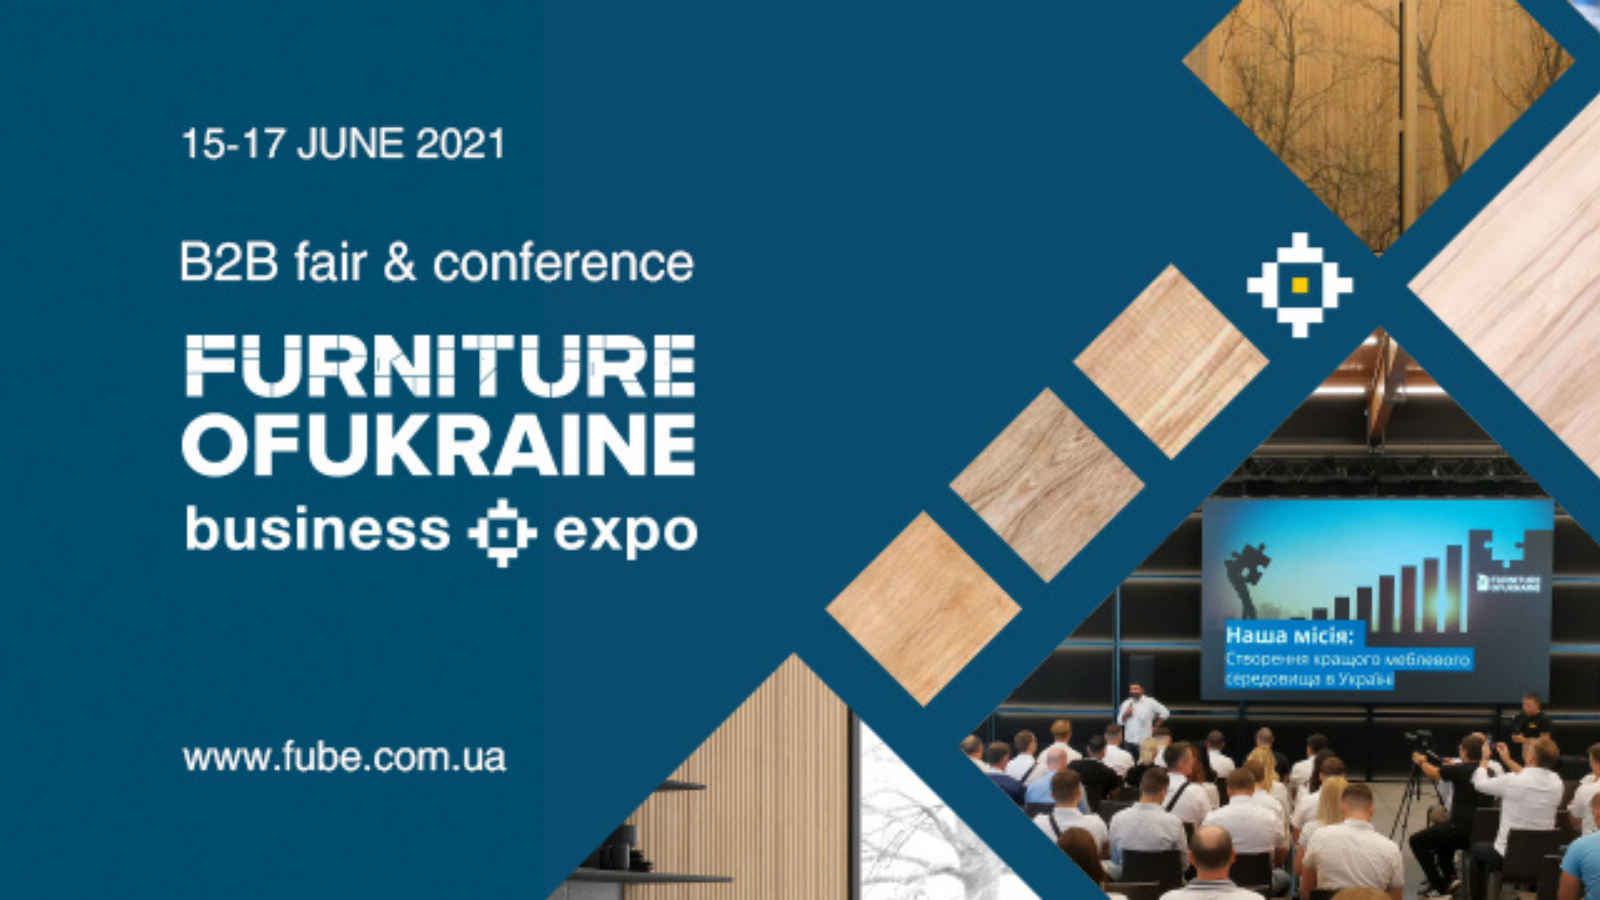 FURNITURE OF UKRAINE BUSINESS EXPO